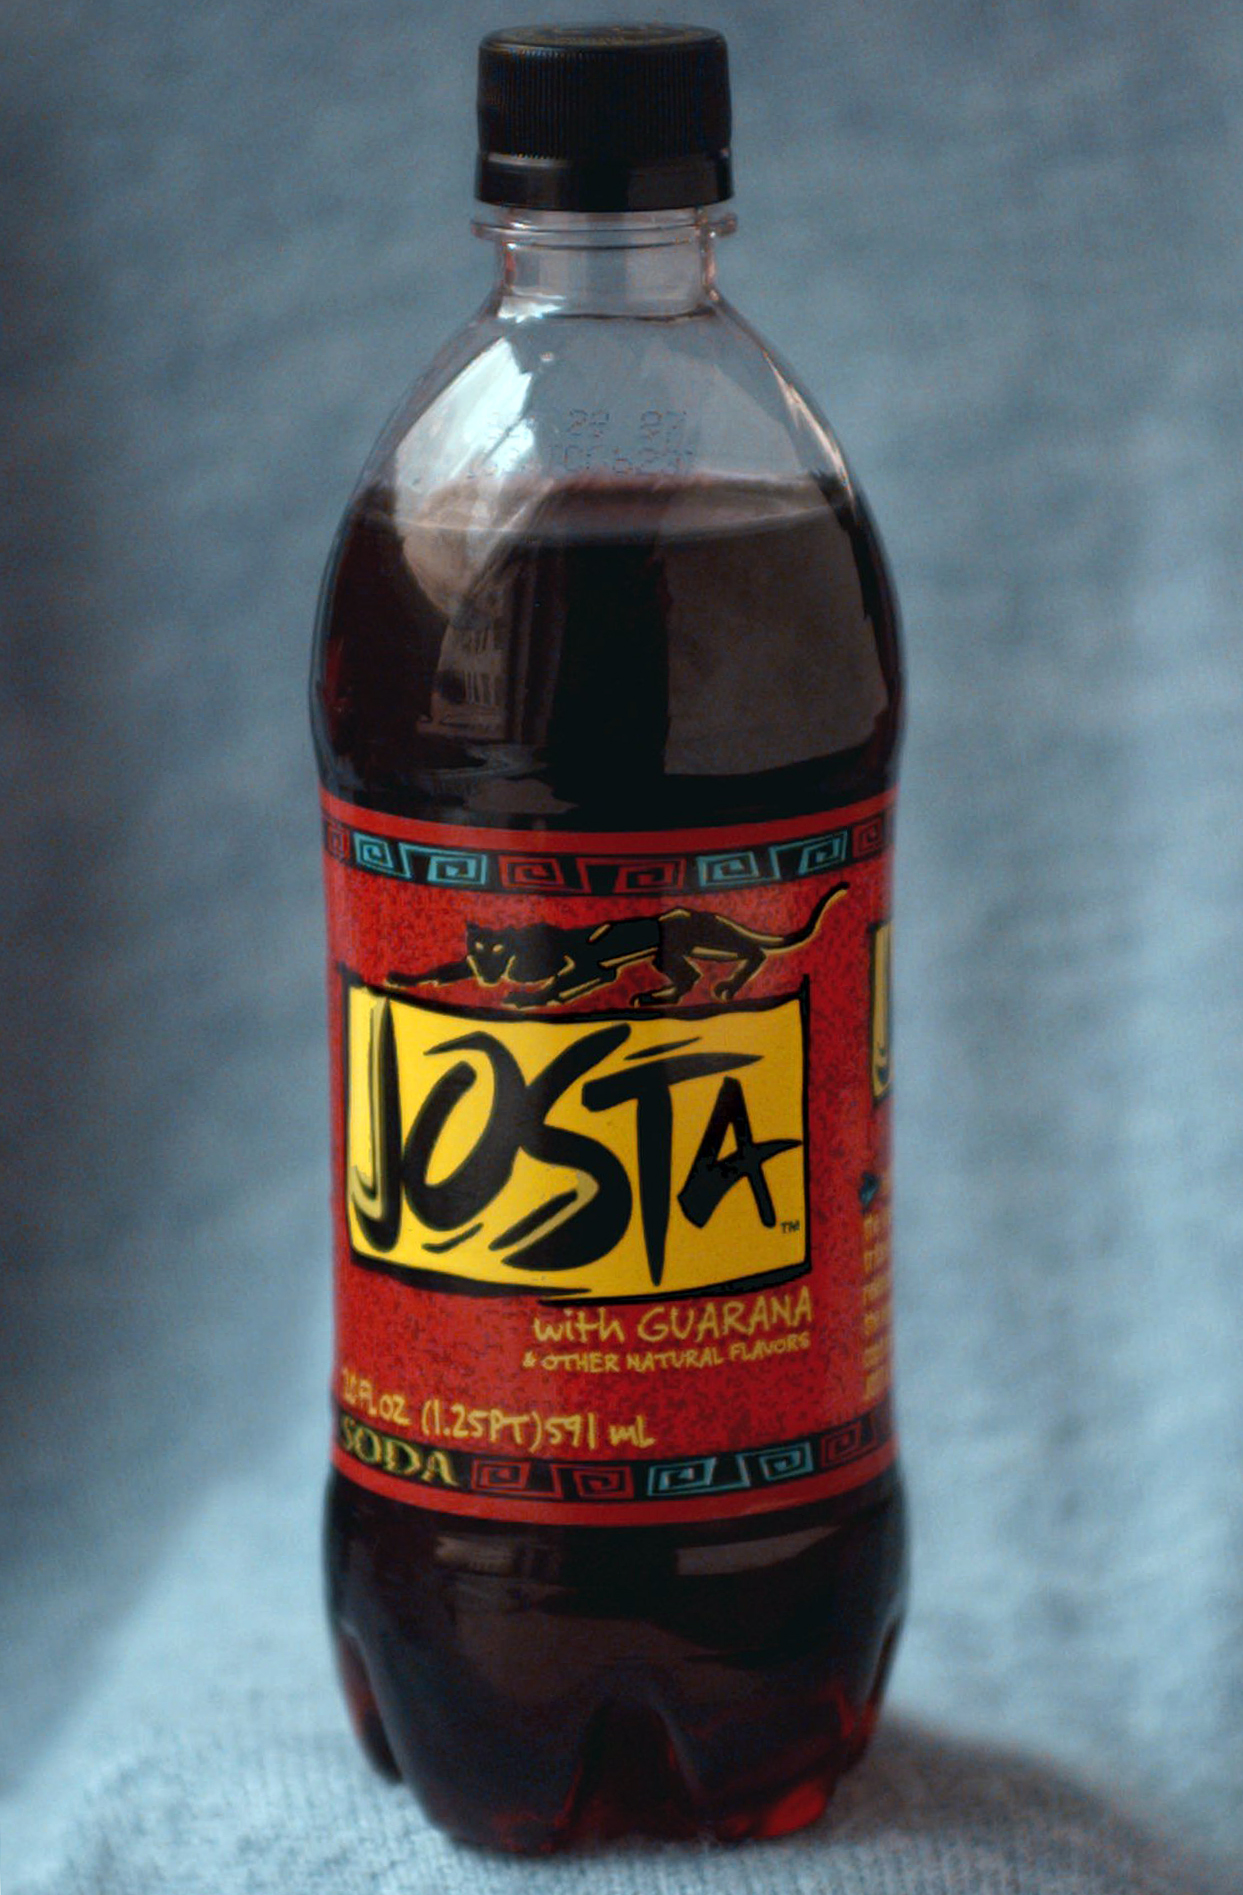 A bottle of Pepsi's new Josta drink